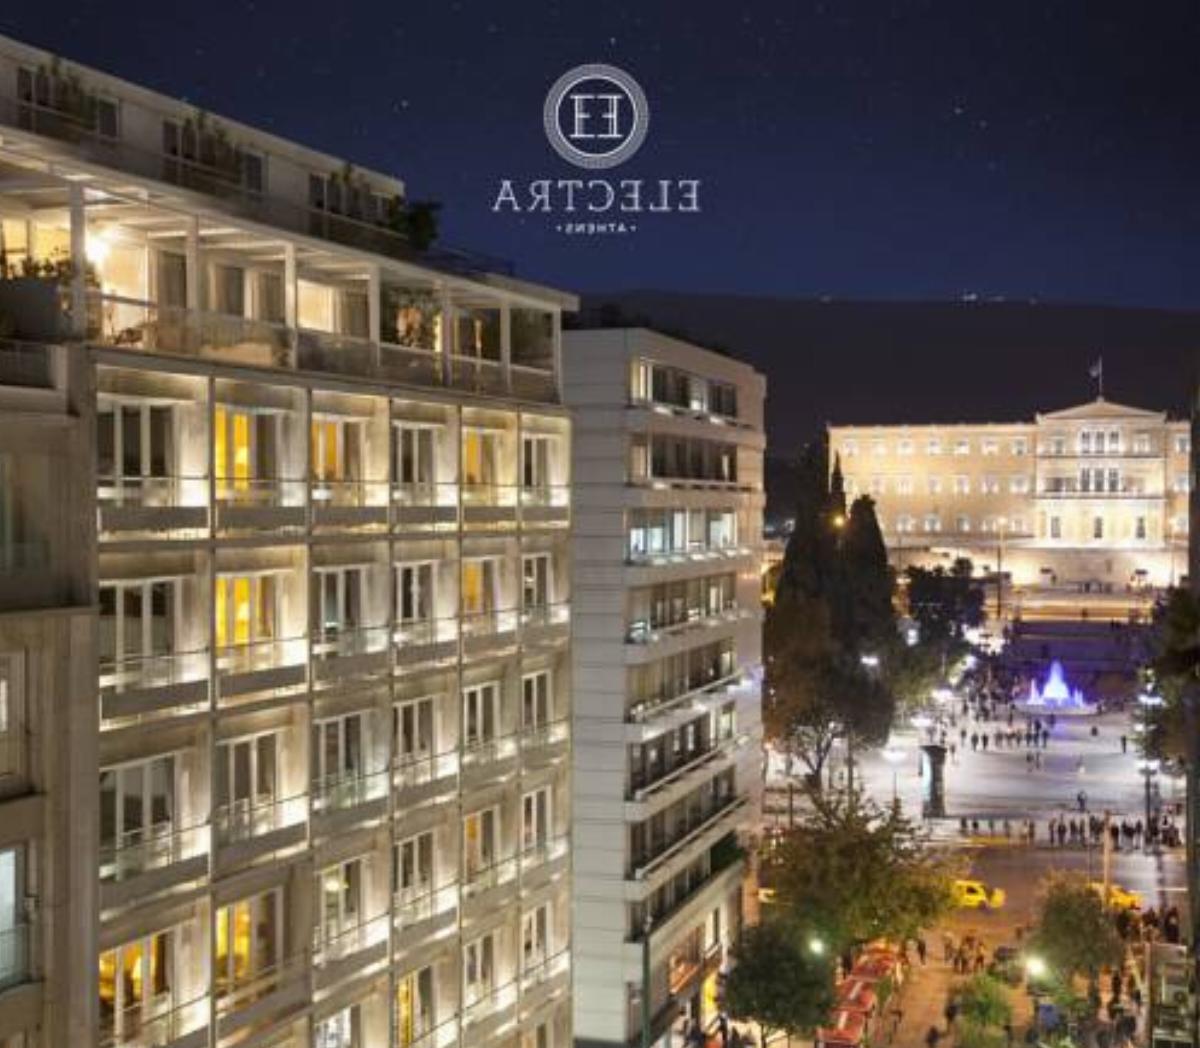 Electra Hotel Athens Hotel Athens Greece